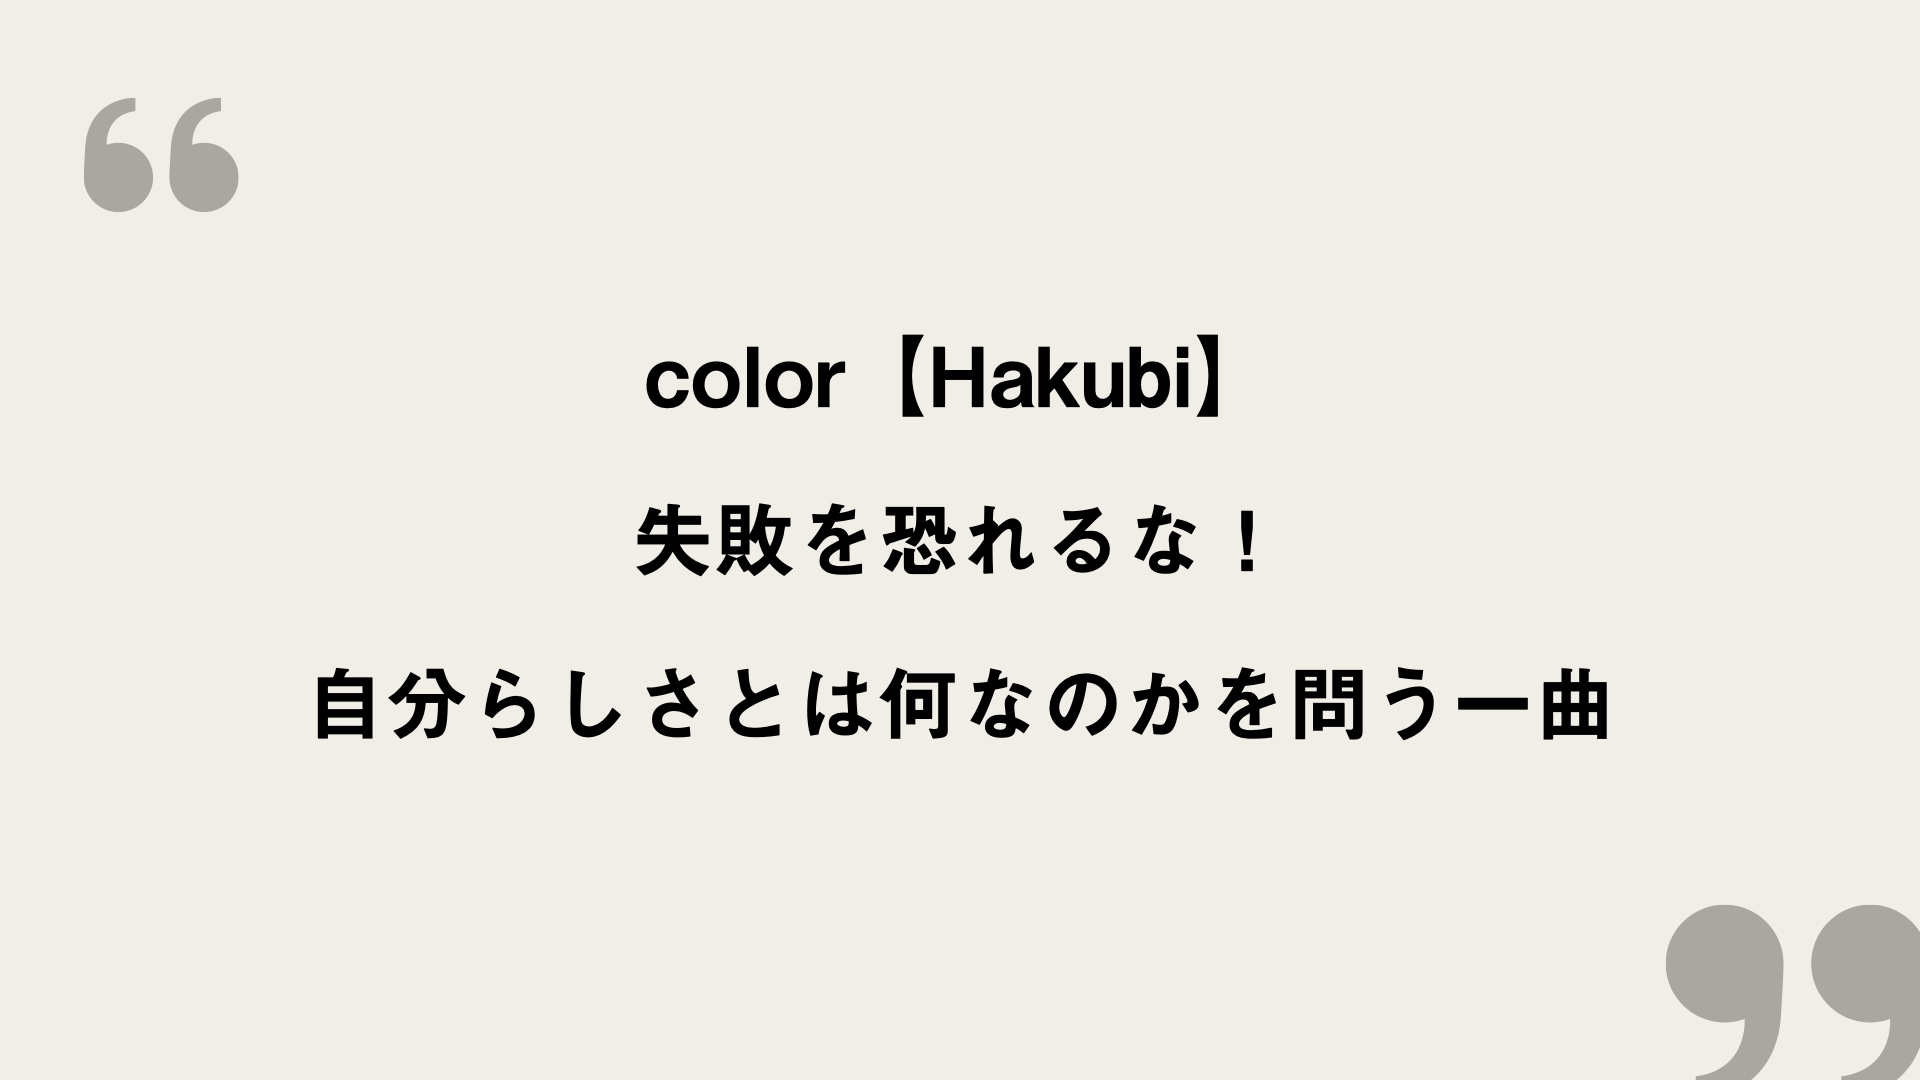 Color Hakubi 歌詞の意味を考察 失敗を恐れるな 自分らしさとは何なのかを問う一曲 Framu Media